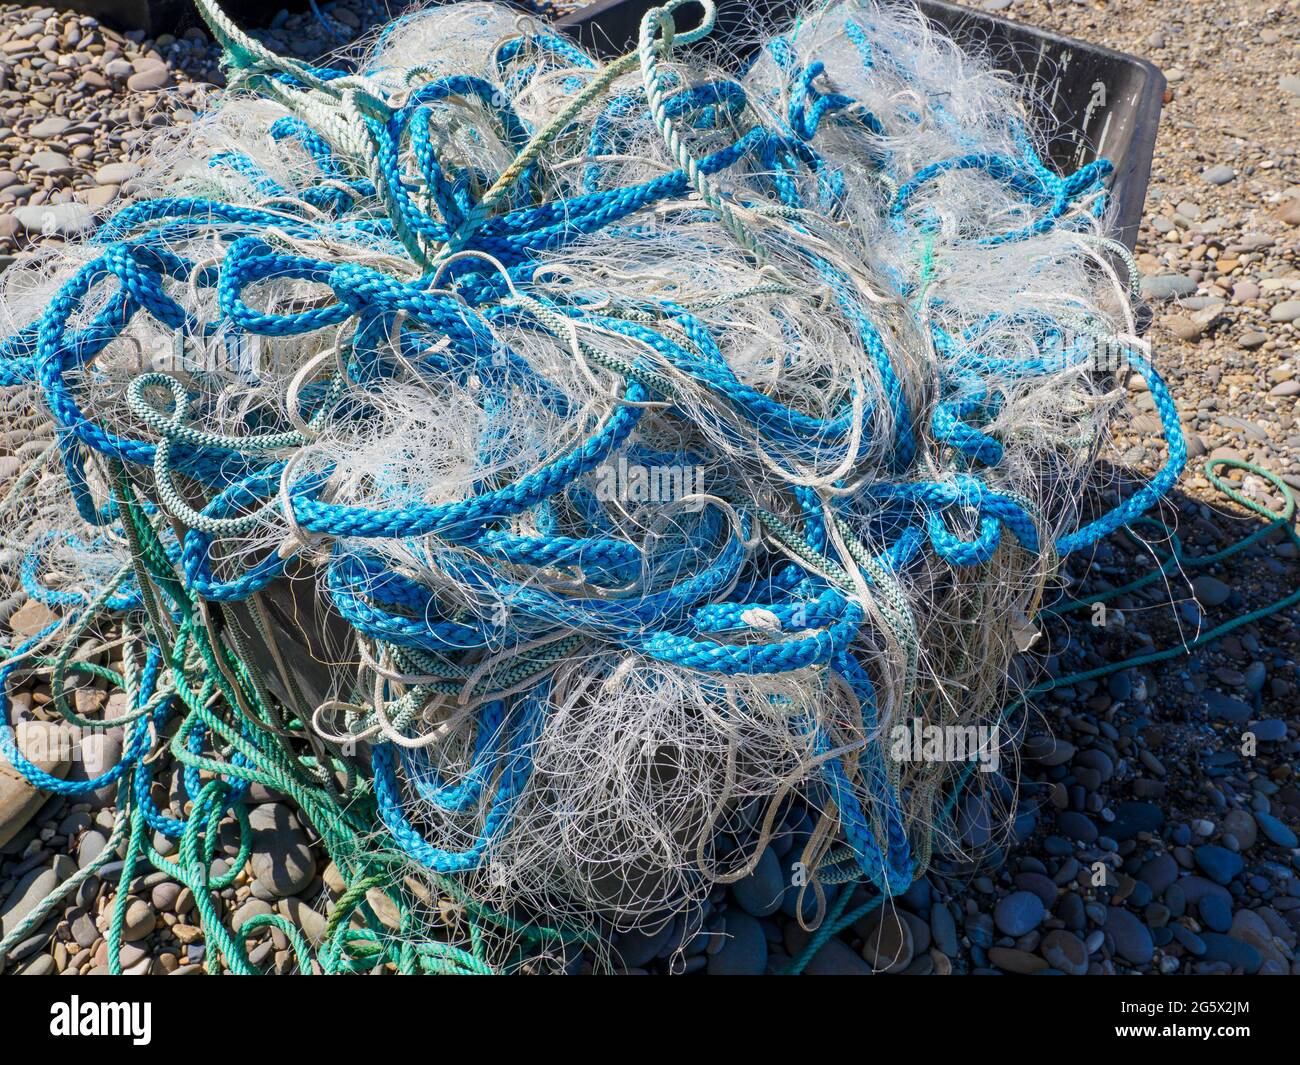 Tangled pile of fishing net and rope, Bude, Cornwall, UK Stock Photo